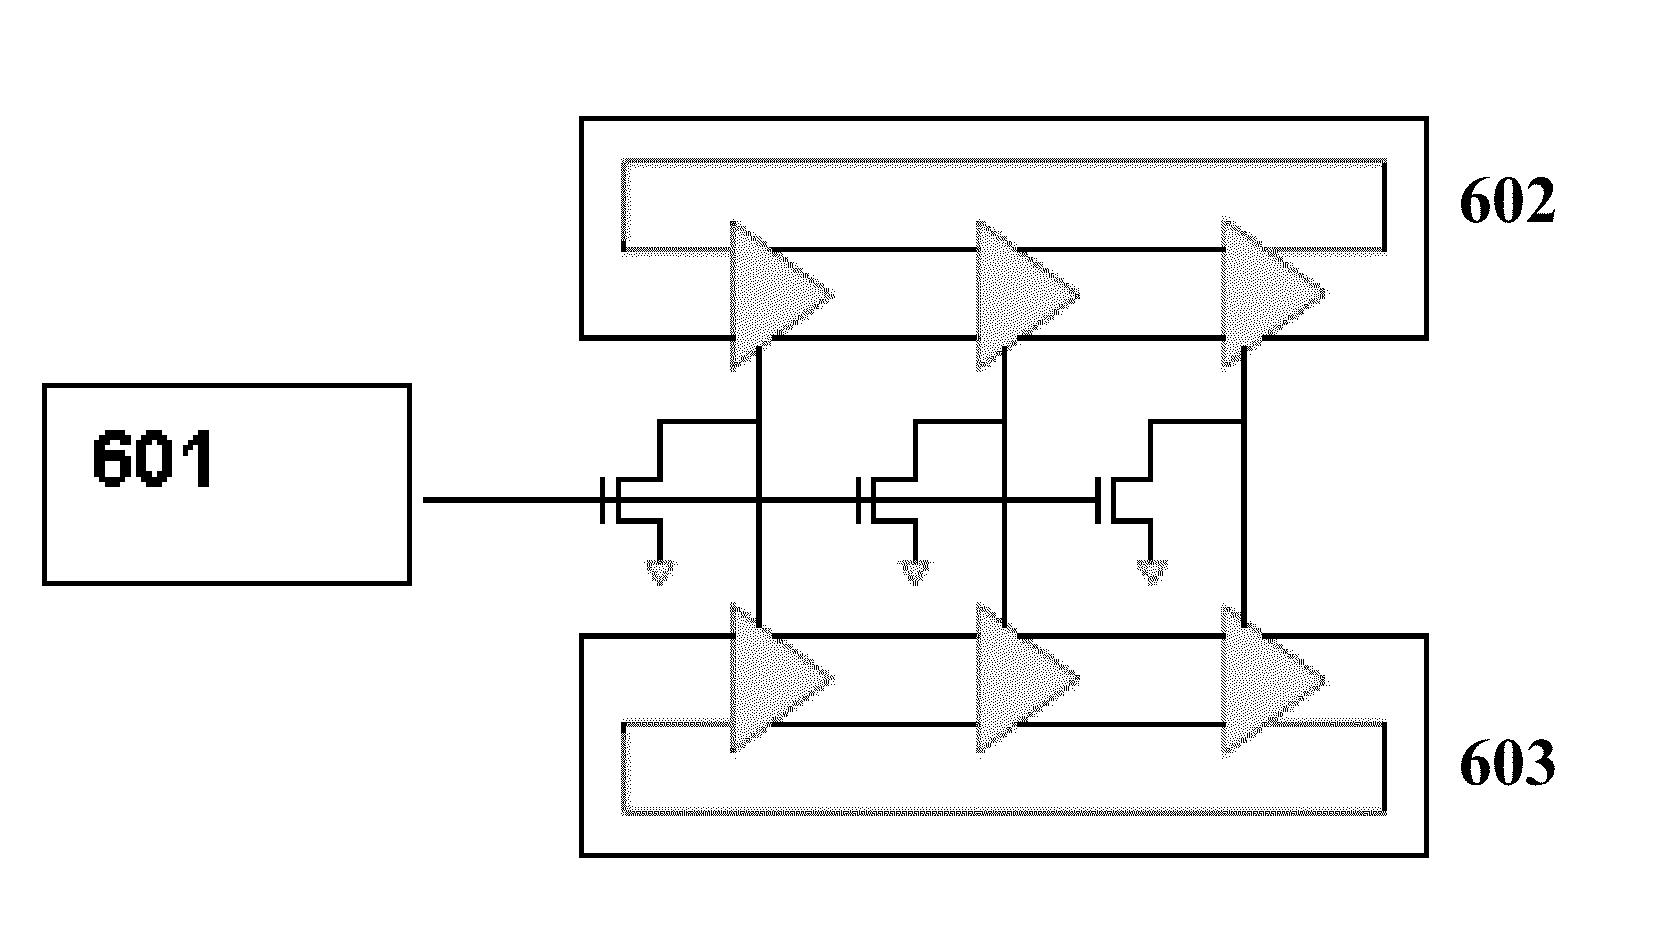 Matrix structure oscillator